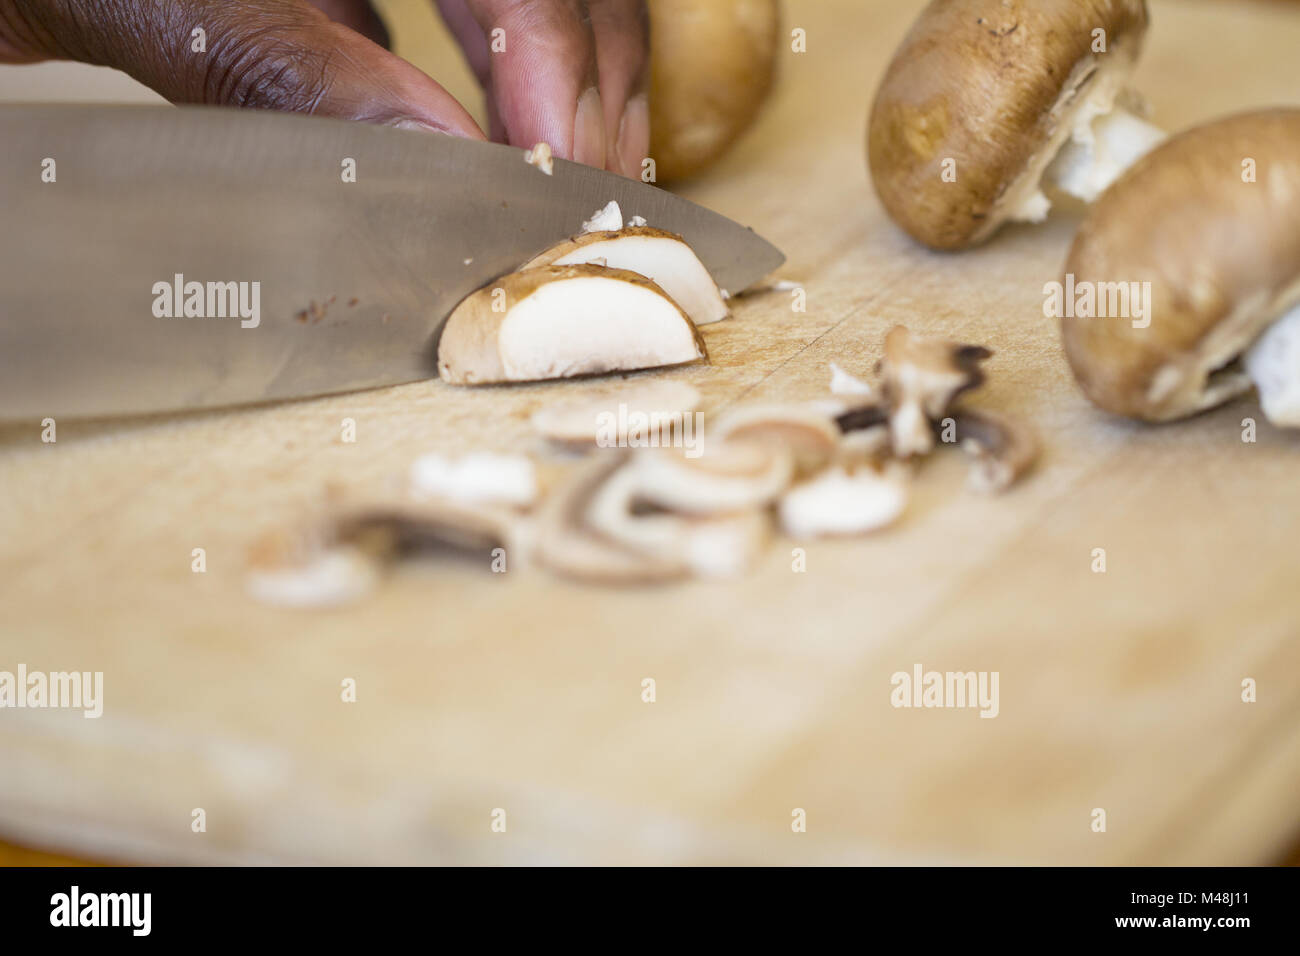 Black man chopping mushrooms on a wooden chopping board Stock Photo